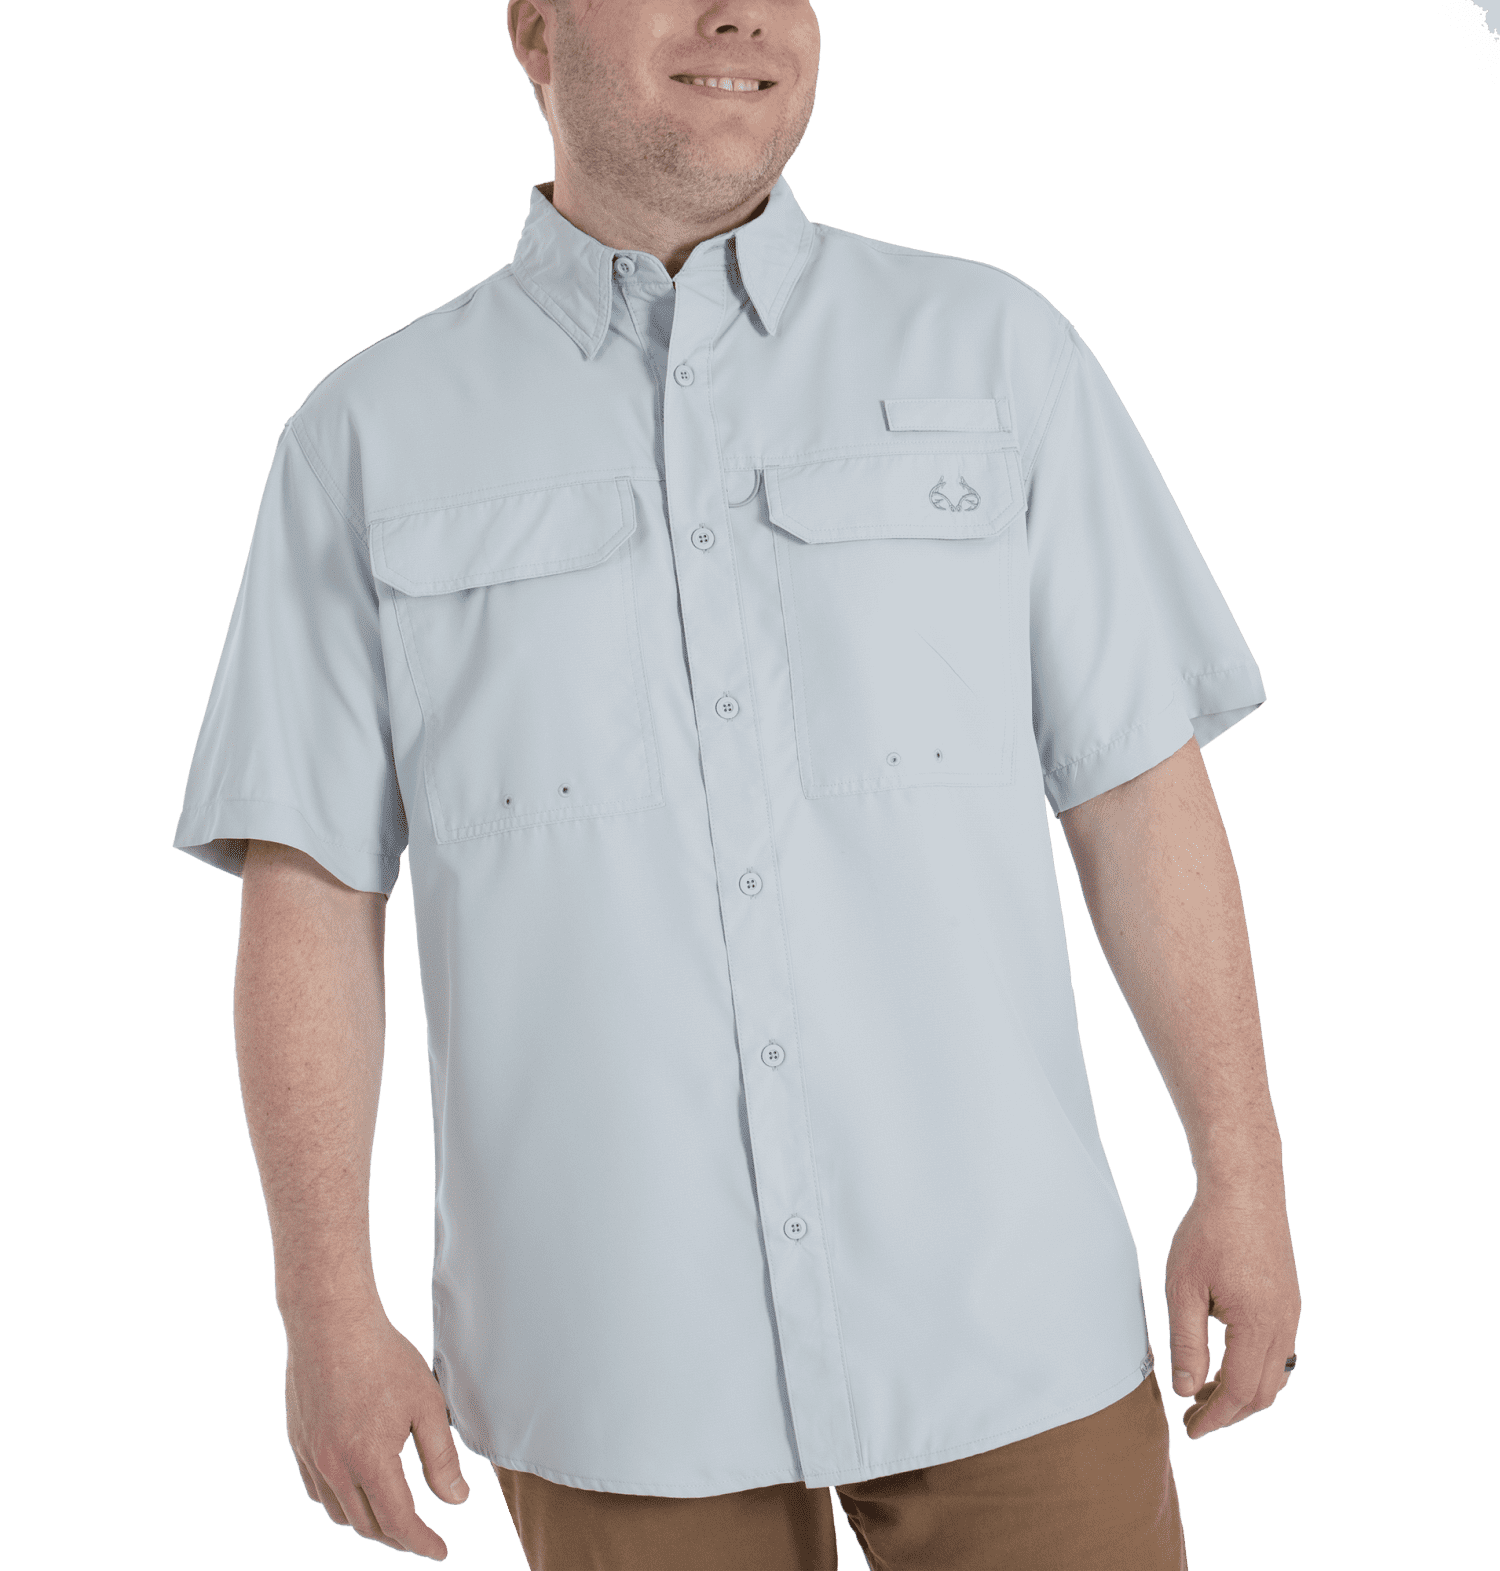 Realtree Short Sleeve Fishing Guide Shirt, Pearl Blue (Men's